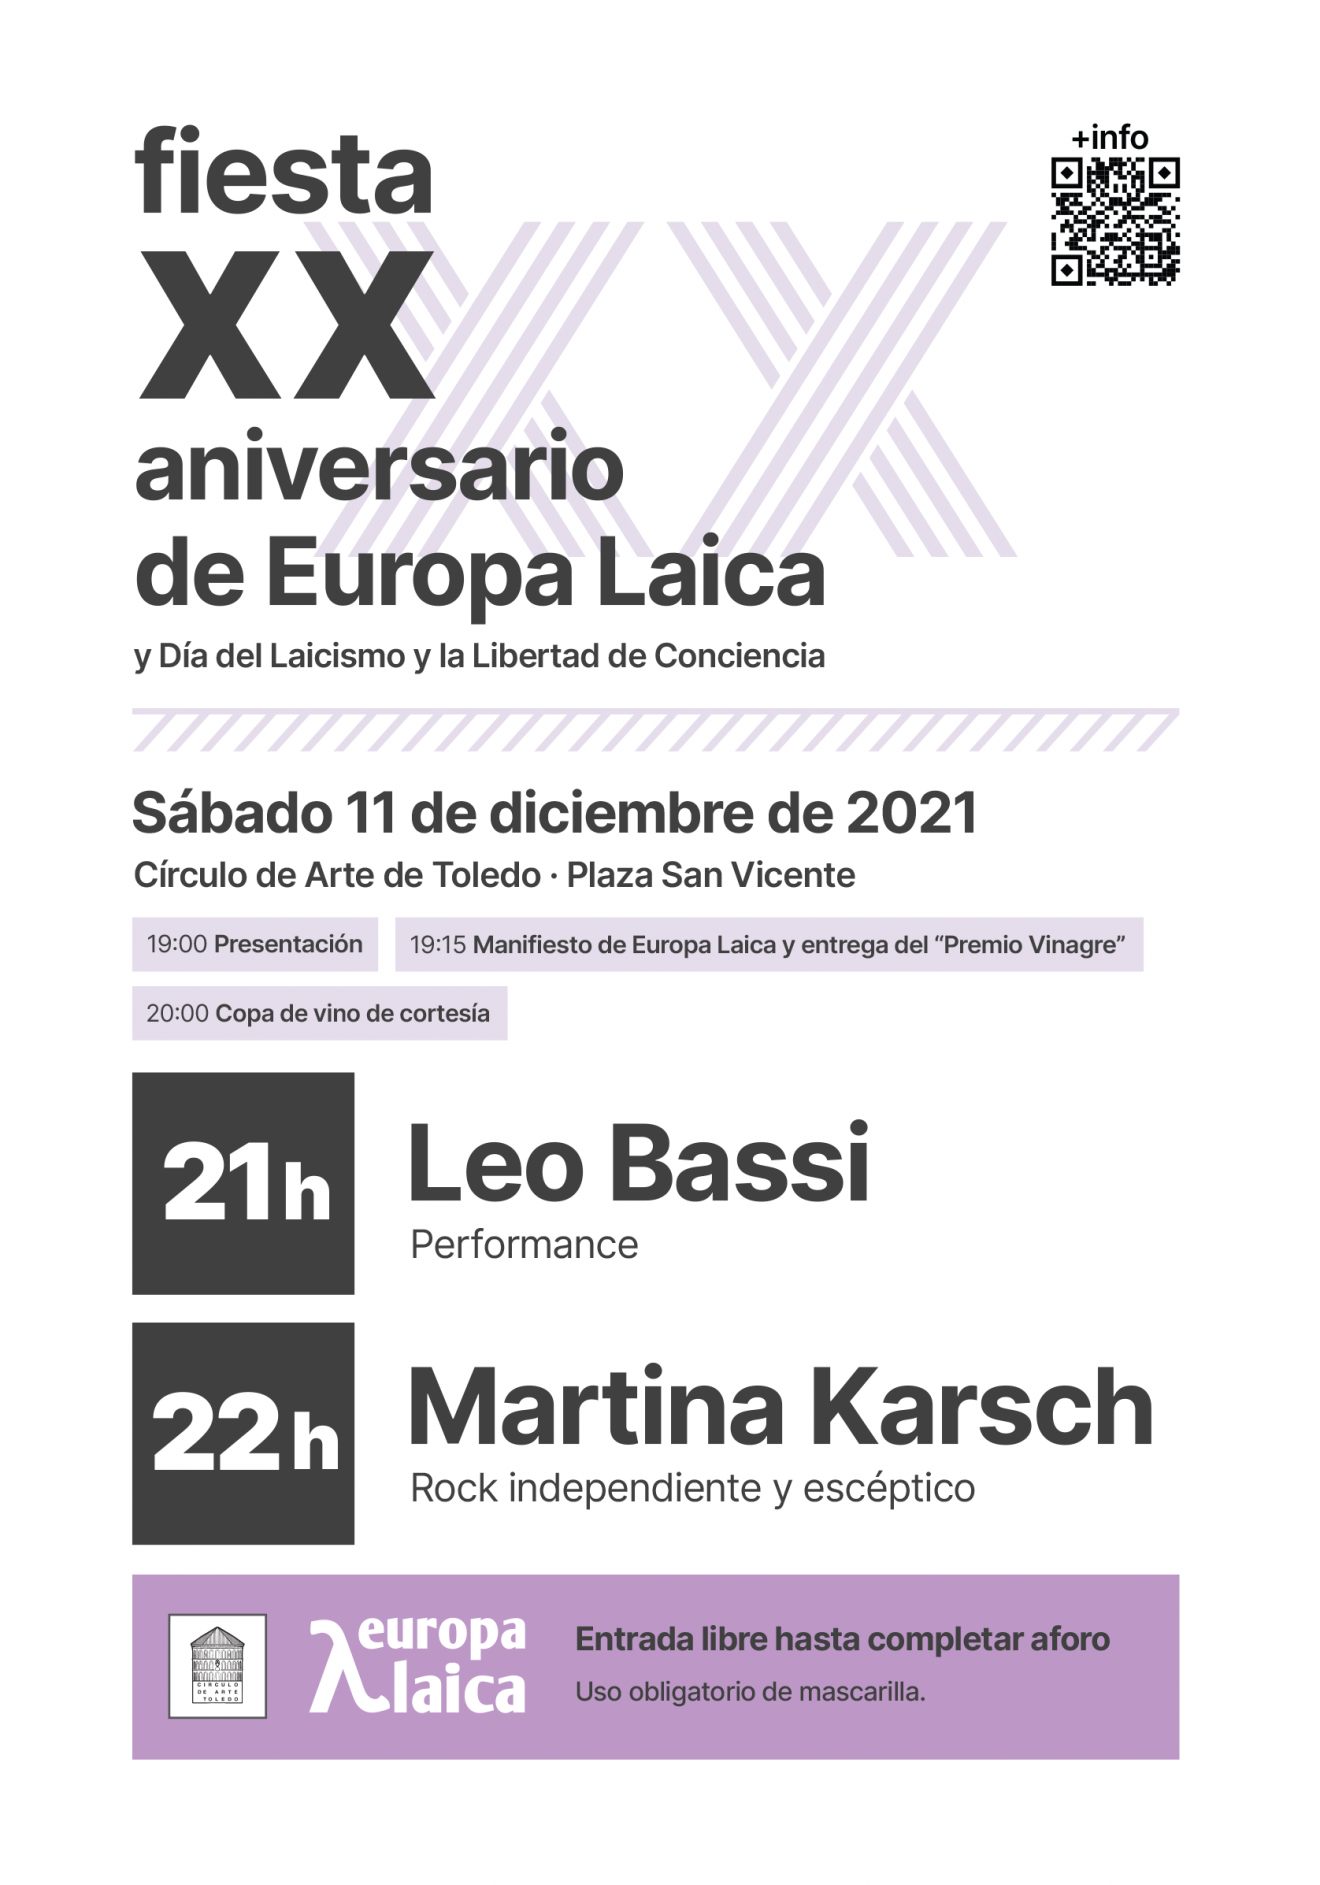 fiesta-XX-aniversario-Europa-Laica-11-dic-2021-circulo-de-arte-de-toledo-HQ-1